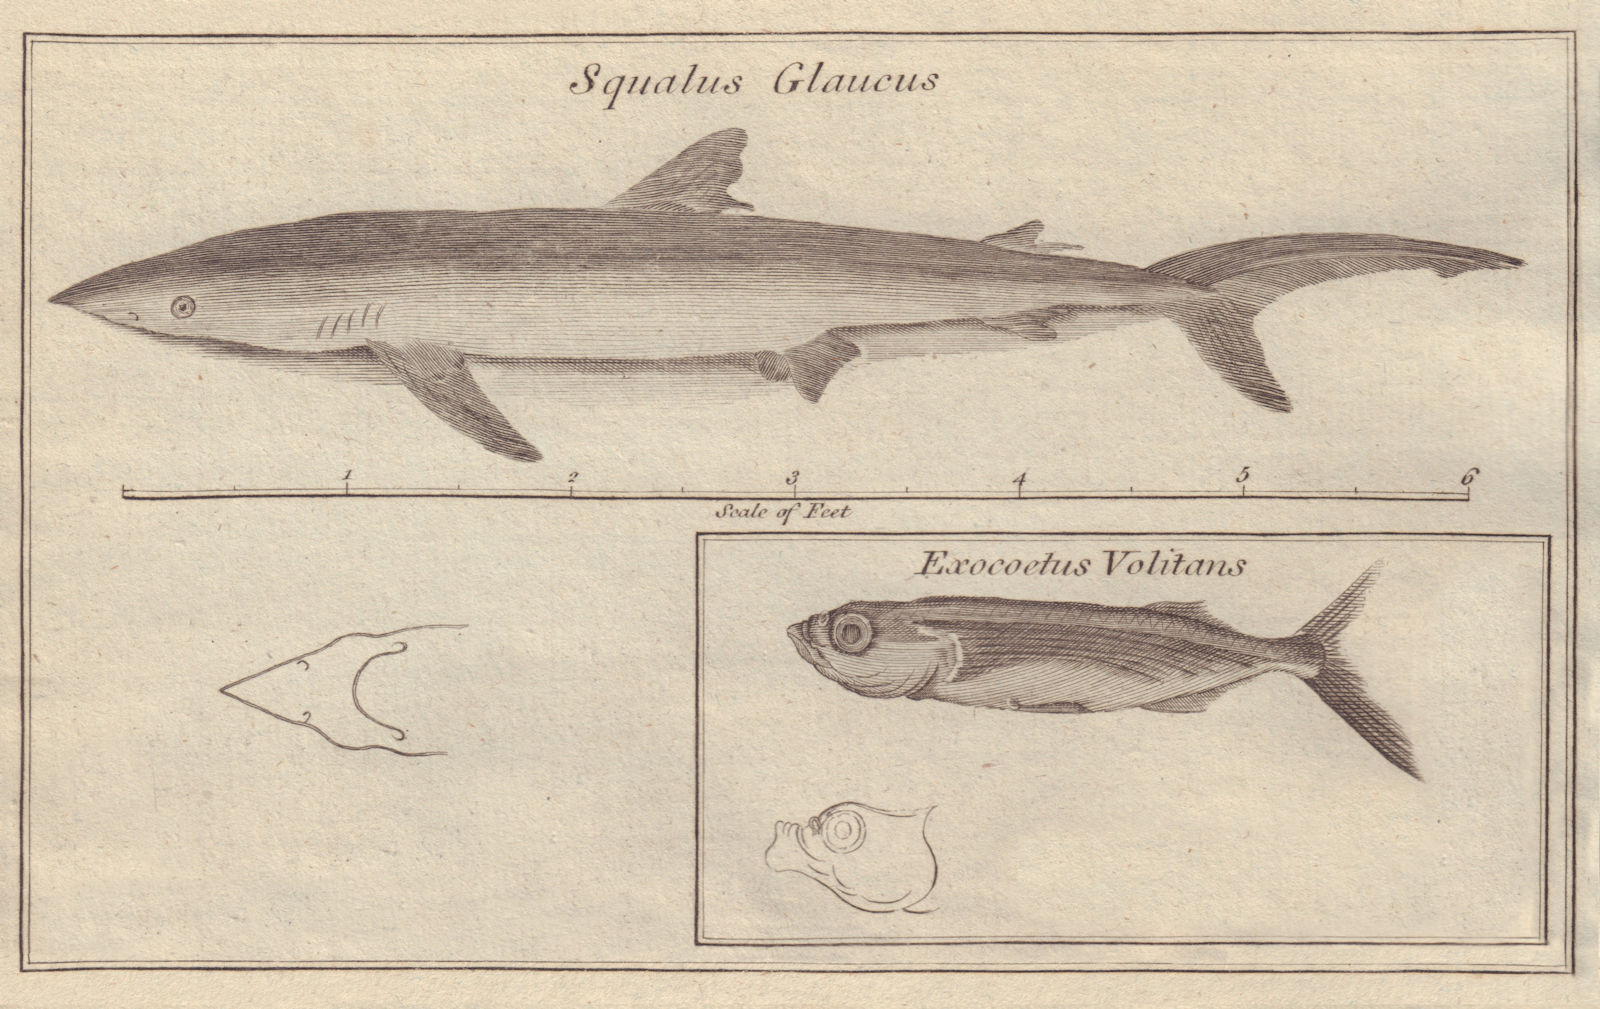 Squalus Glaucus (Blue Shark). Exocoetus Volitans (Flying Fish) 1779 old print